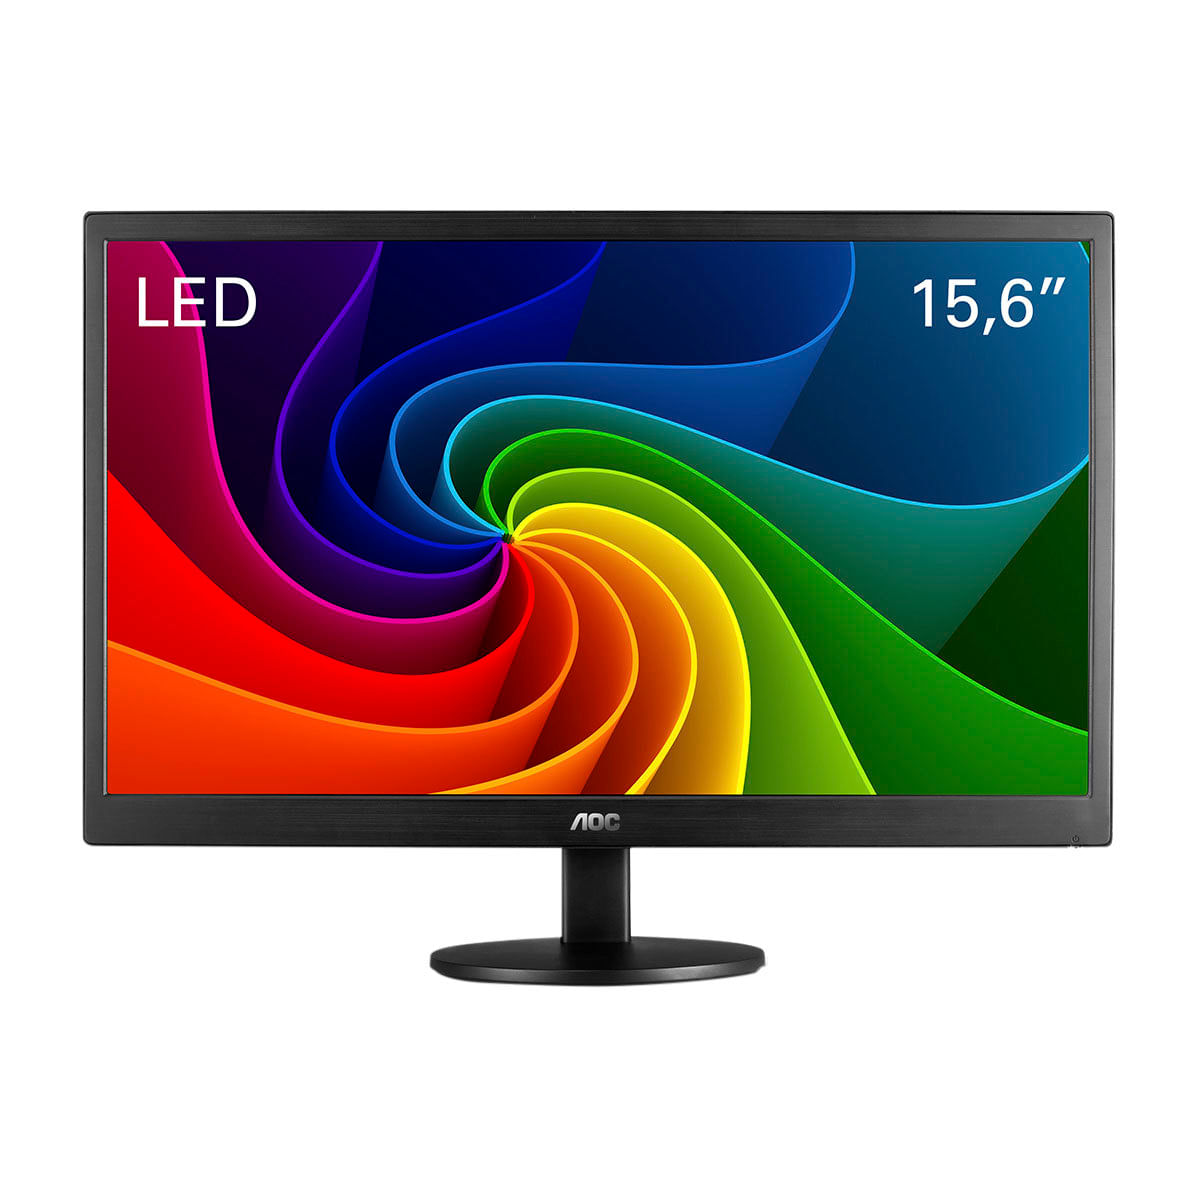 Menor preço em Monitor AOC 15,6" LED HD VGA Widescreen E1670SWU